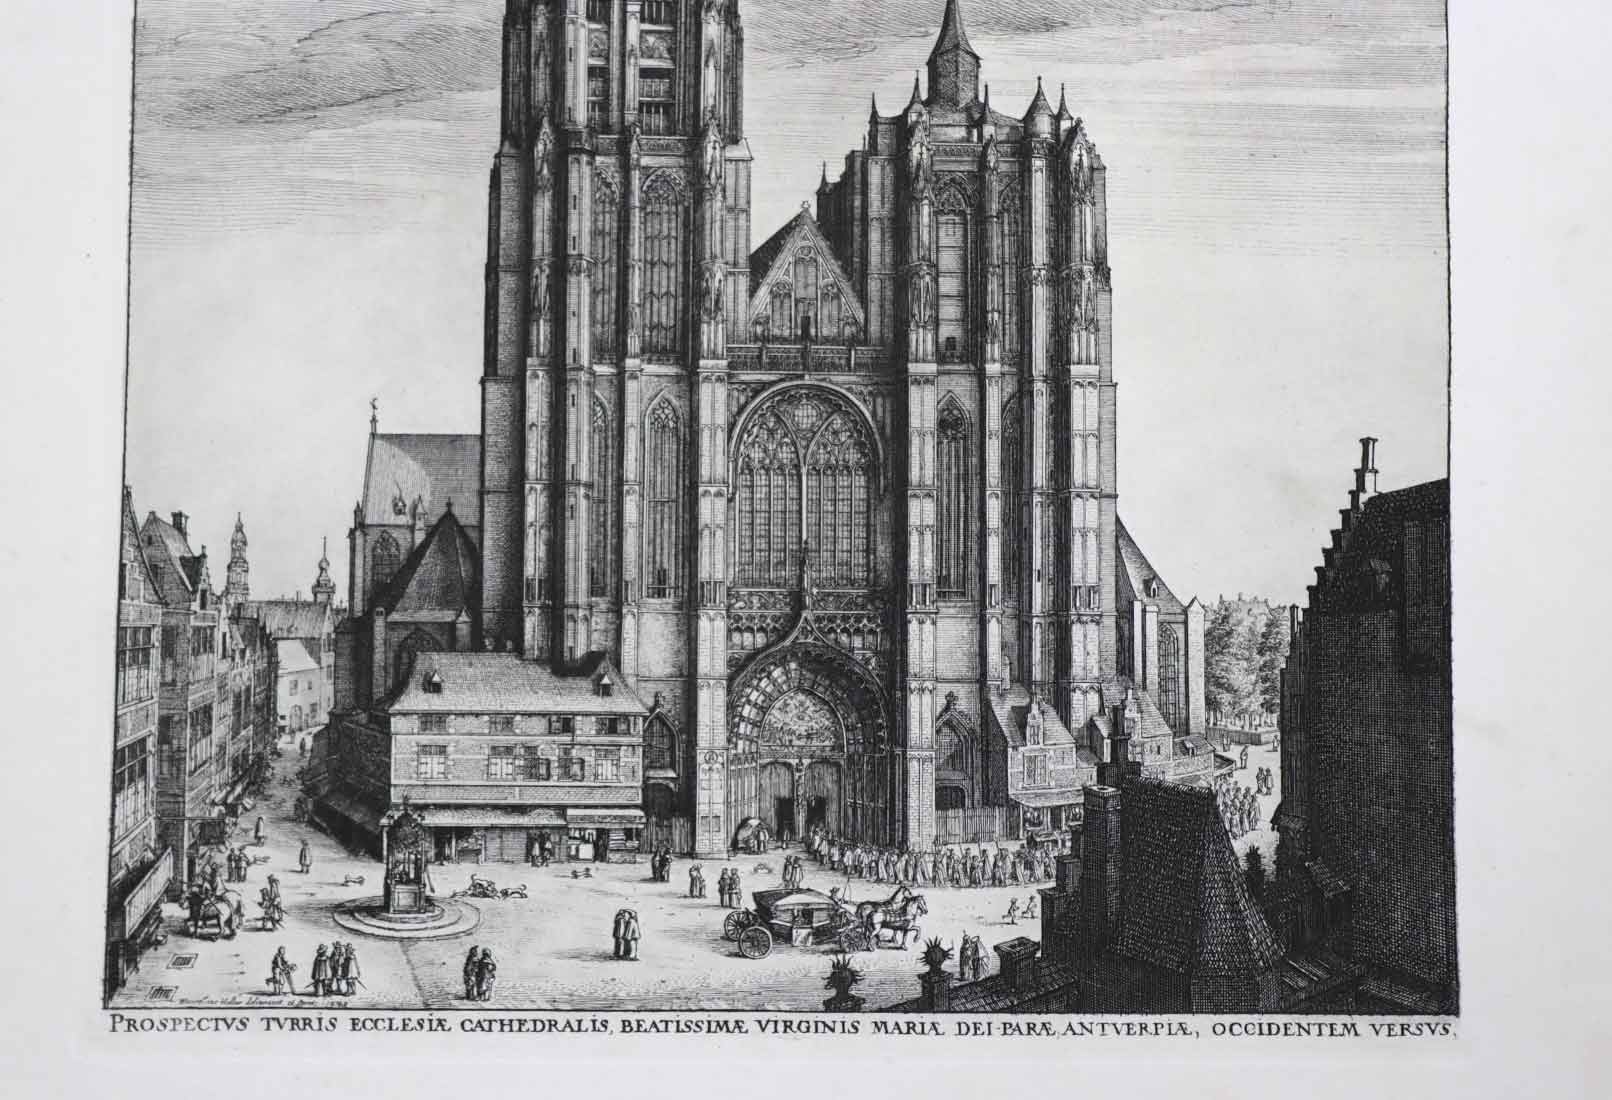 Kathedrale Antwerpen - Image 2 of 2